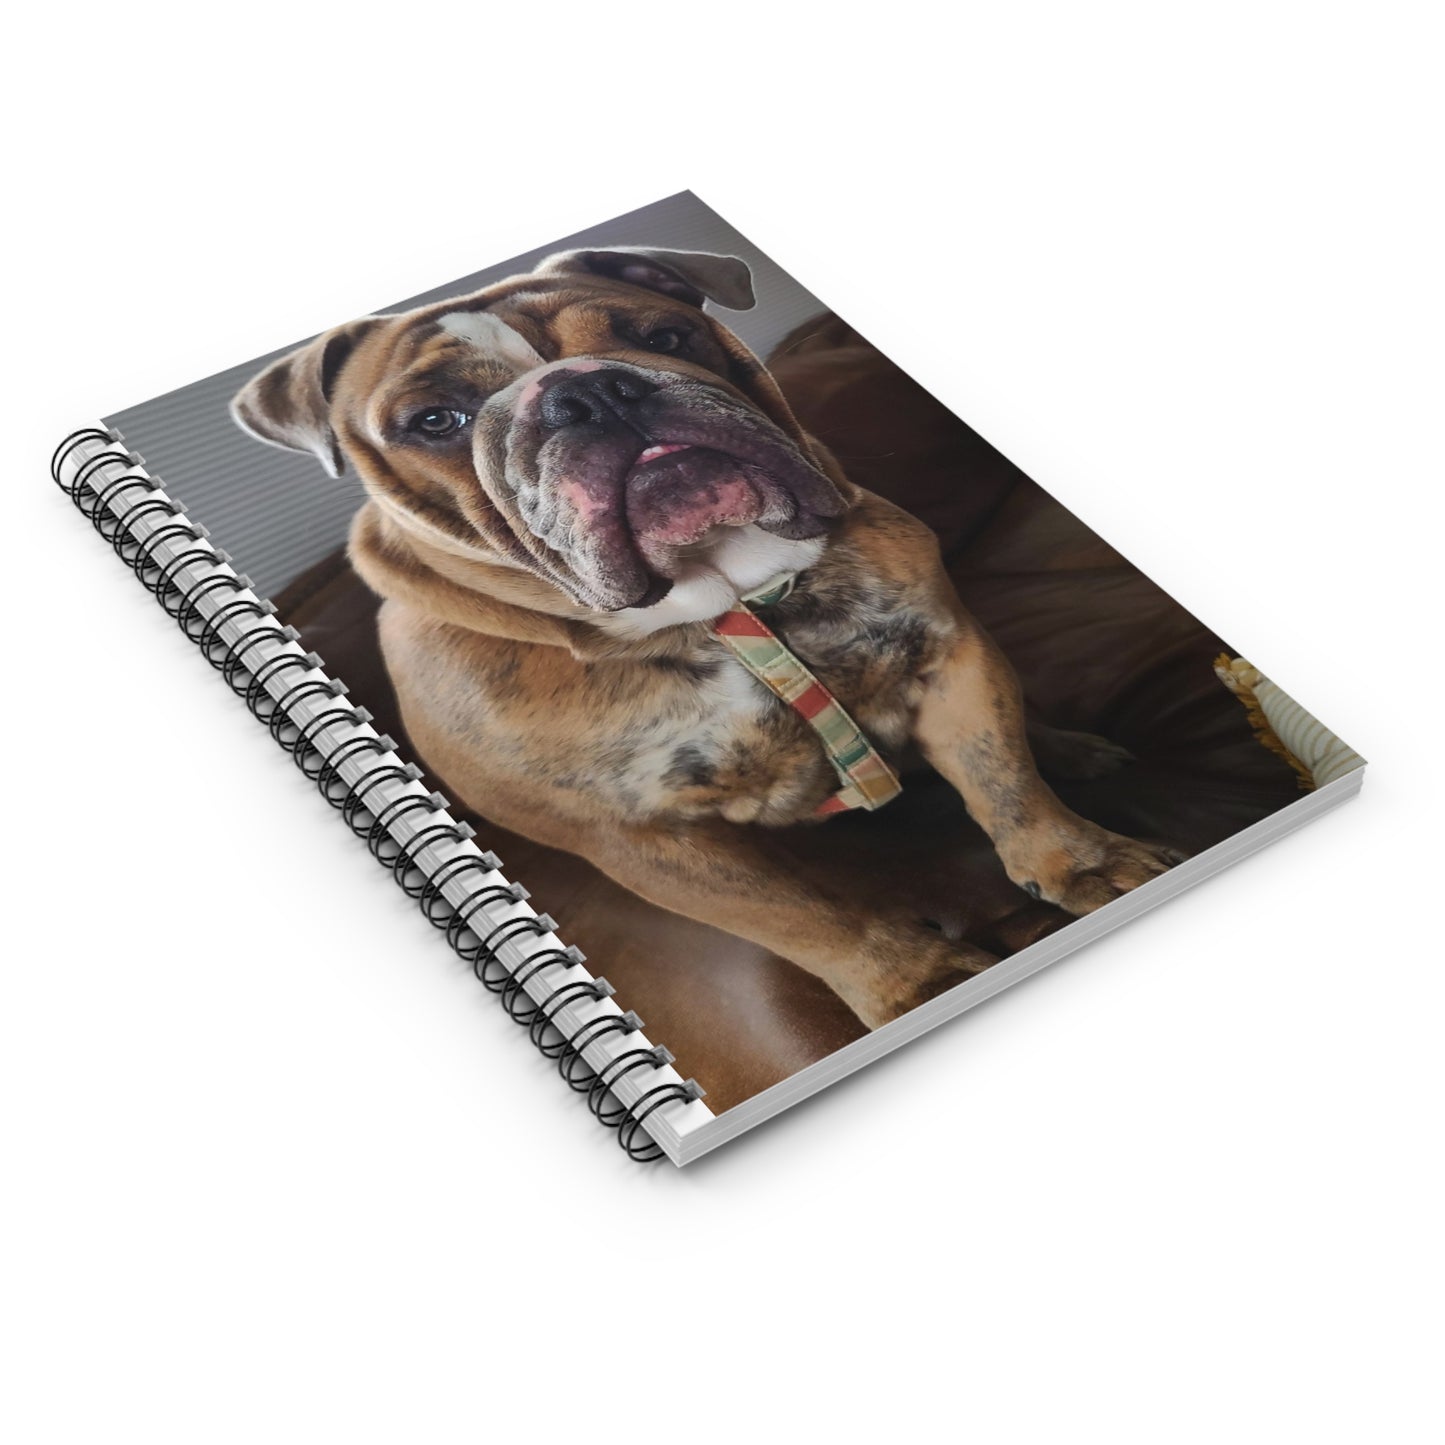 TOP DOG Spiral Notebook - Ruled Line